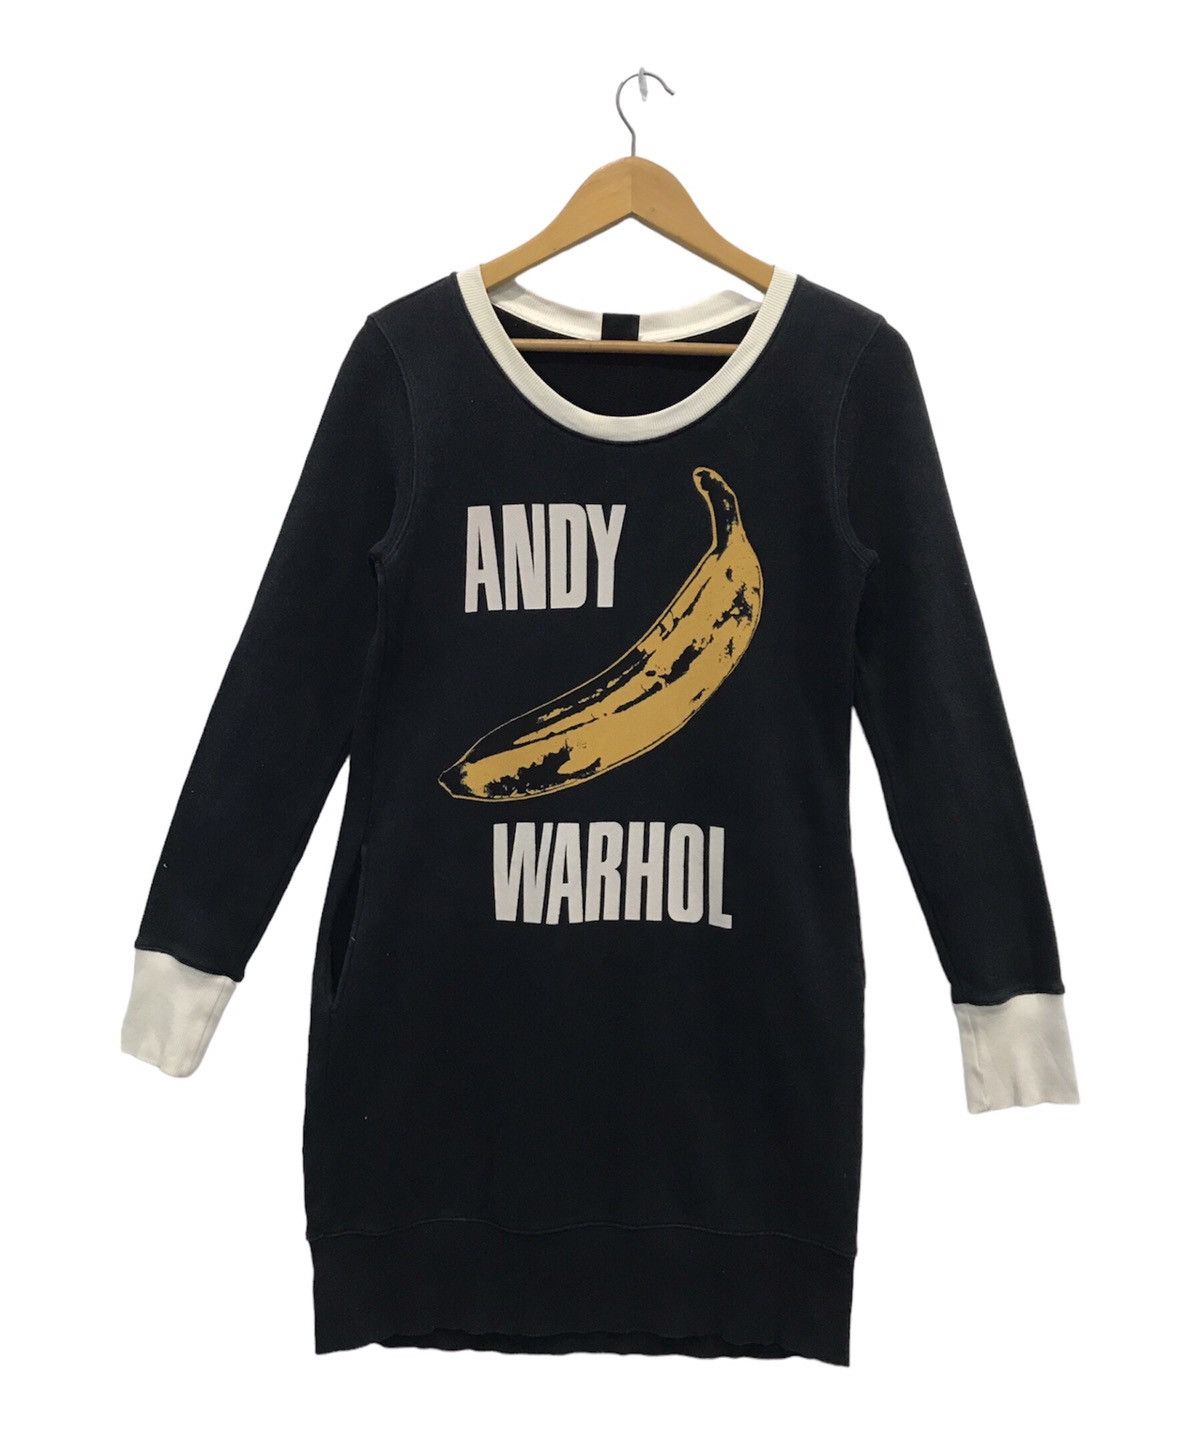 Andy Warhol Andy Warhol Velvet Underground Ladies Sweatshirt.. S62 Size M / US 6-8 / IT 42-44 - 1 Preview